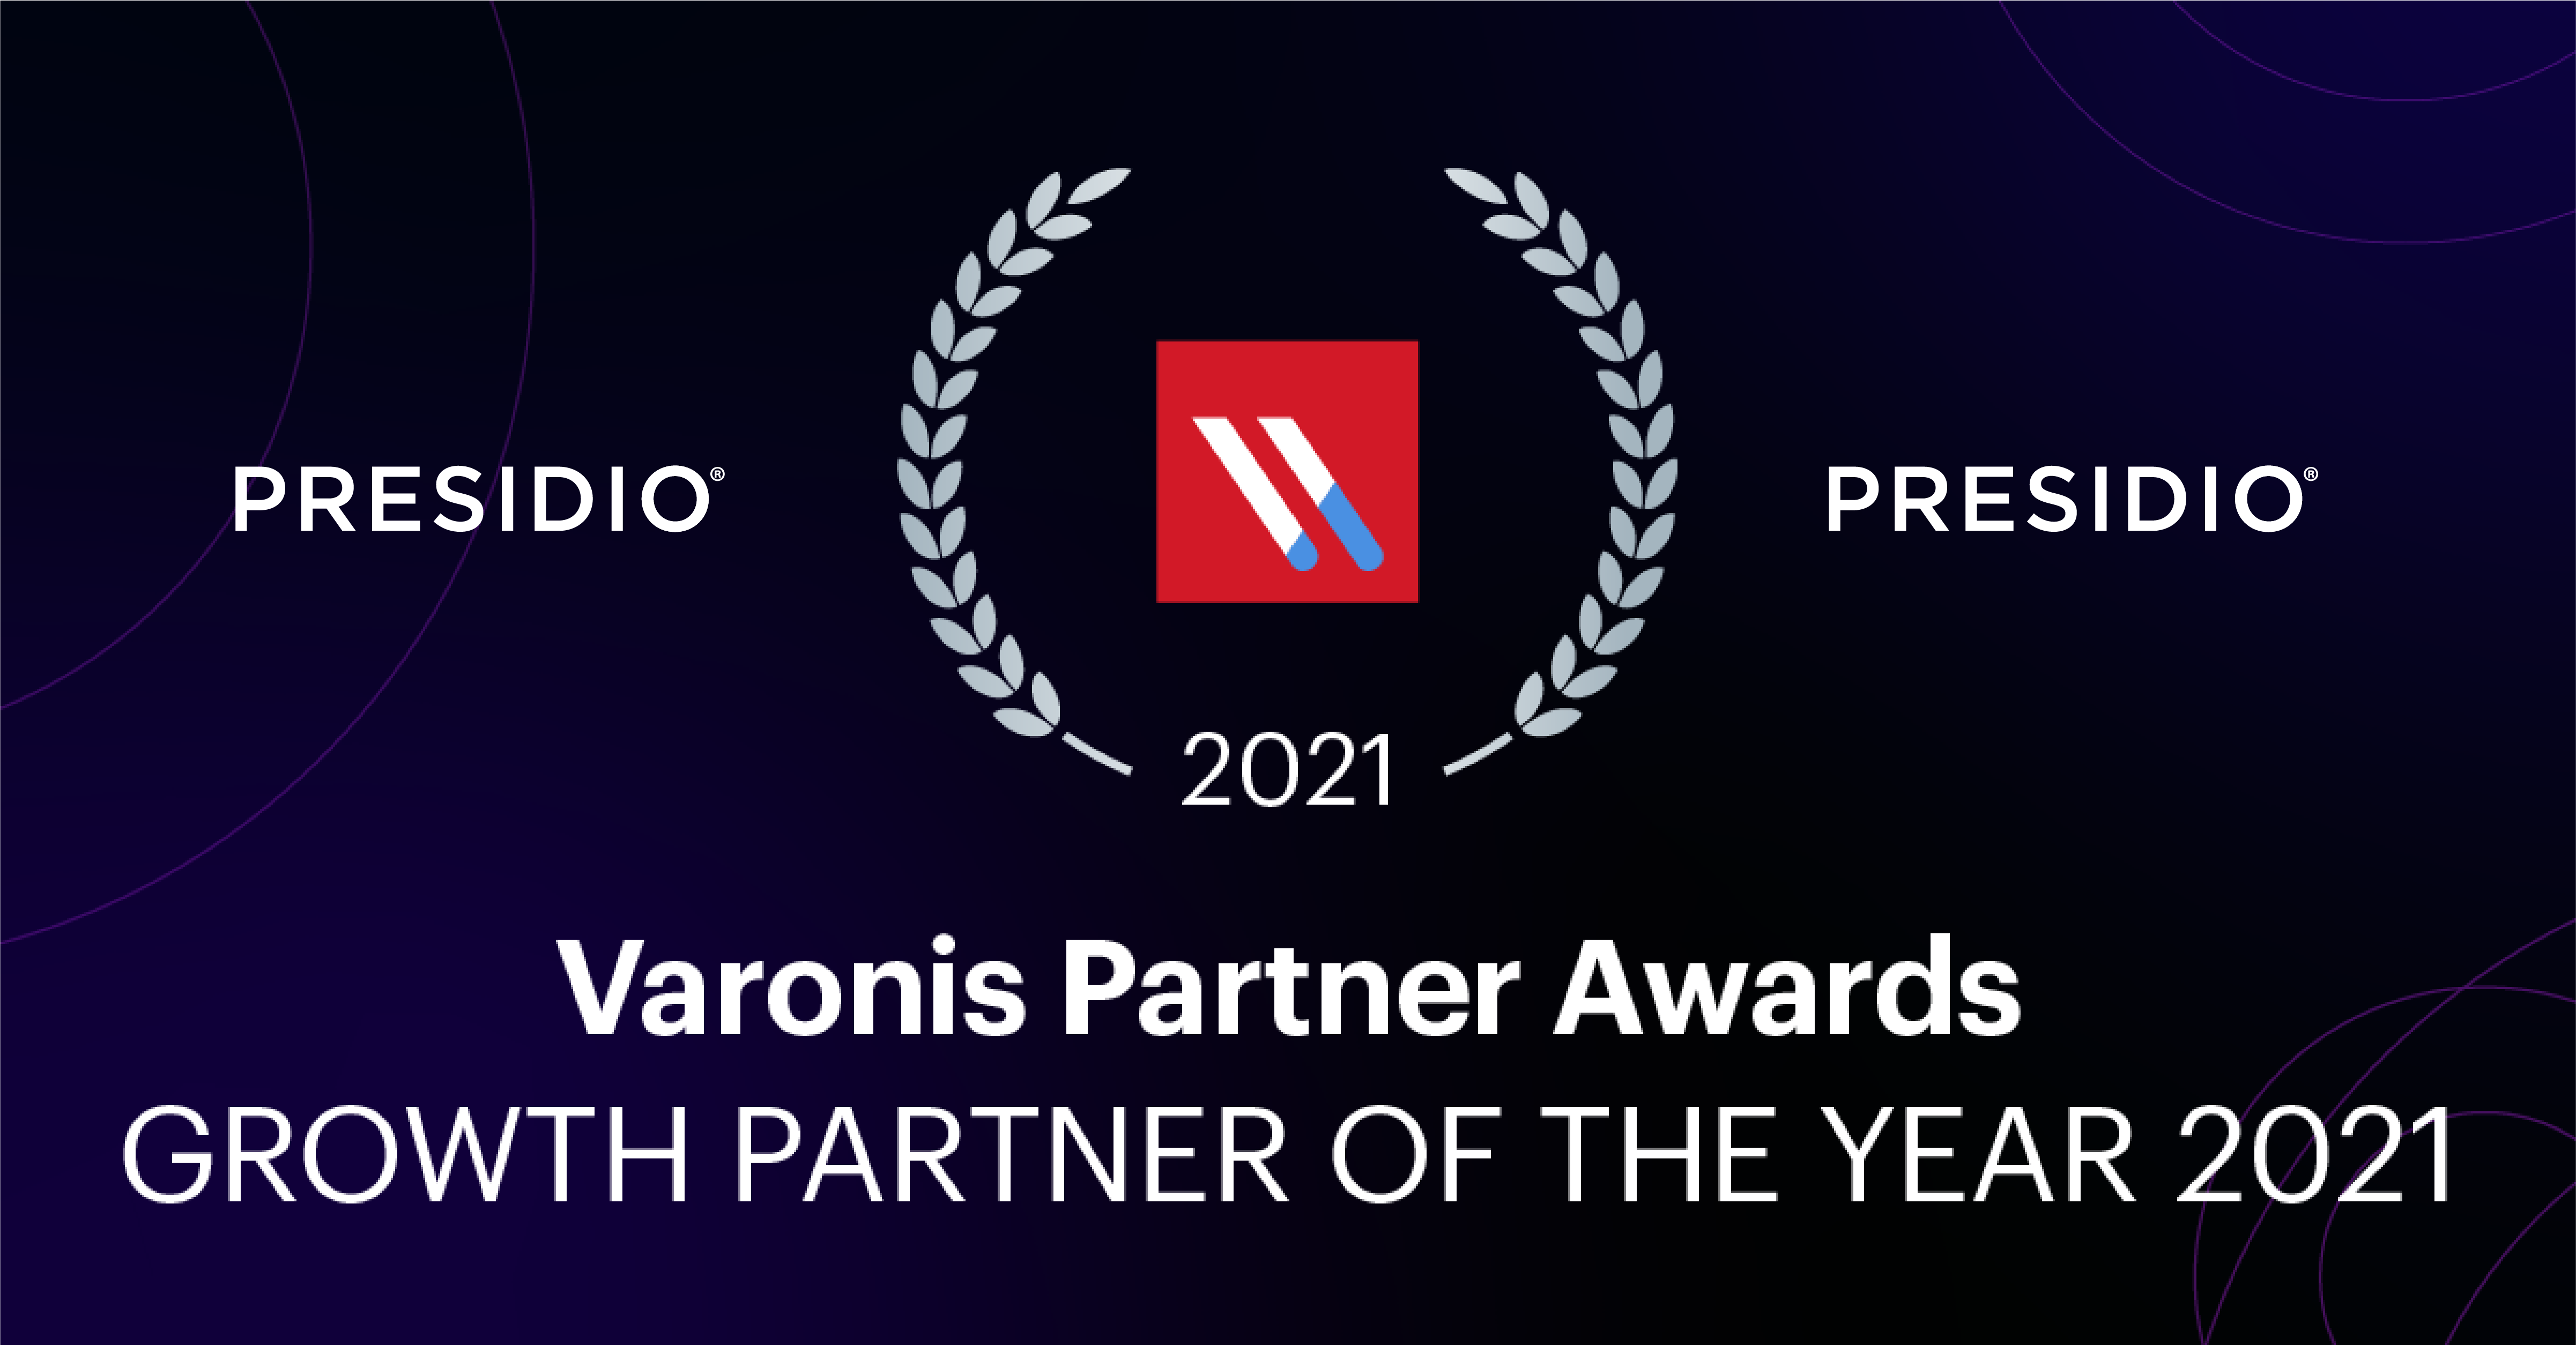 Varonis Partner Award - Presidio Growth Partner of the Year 2021